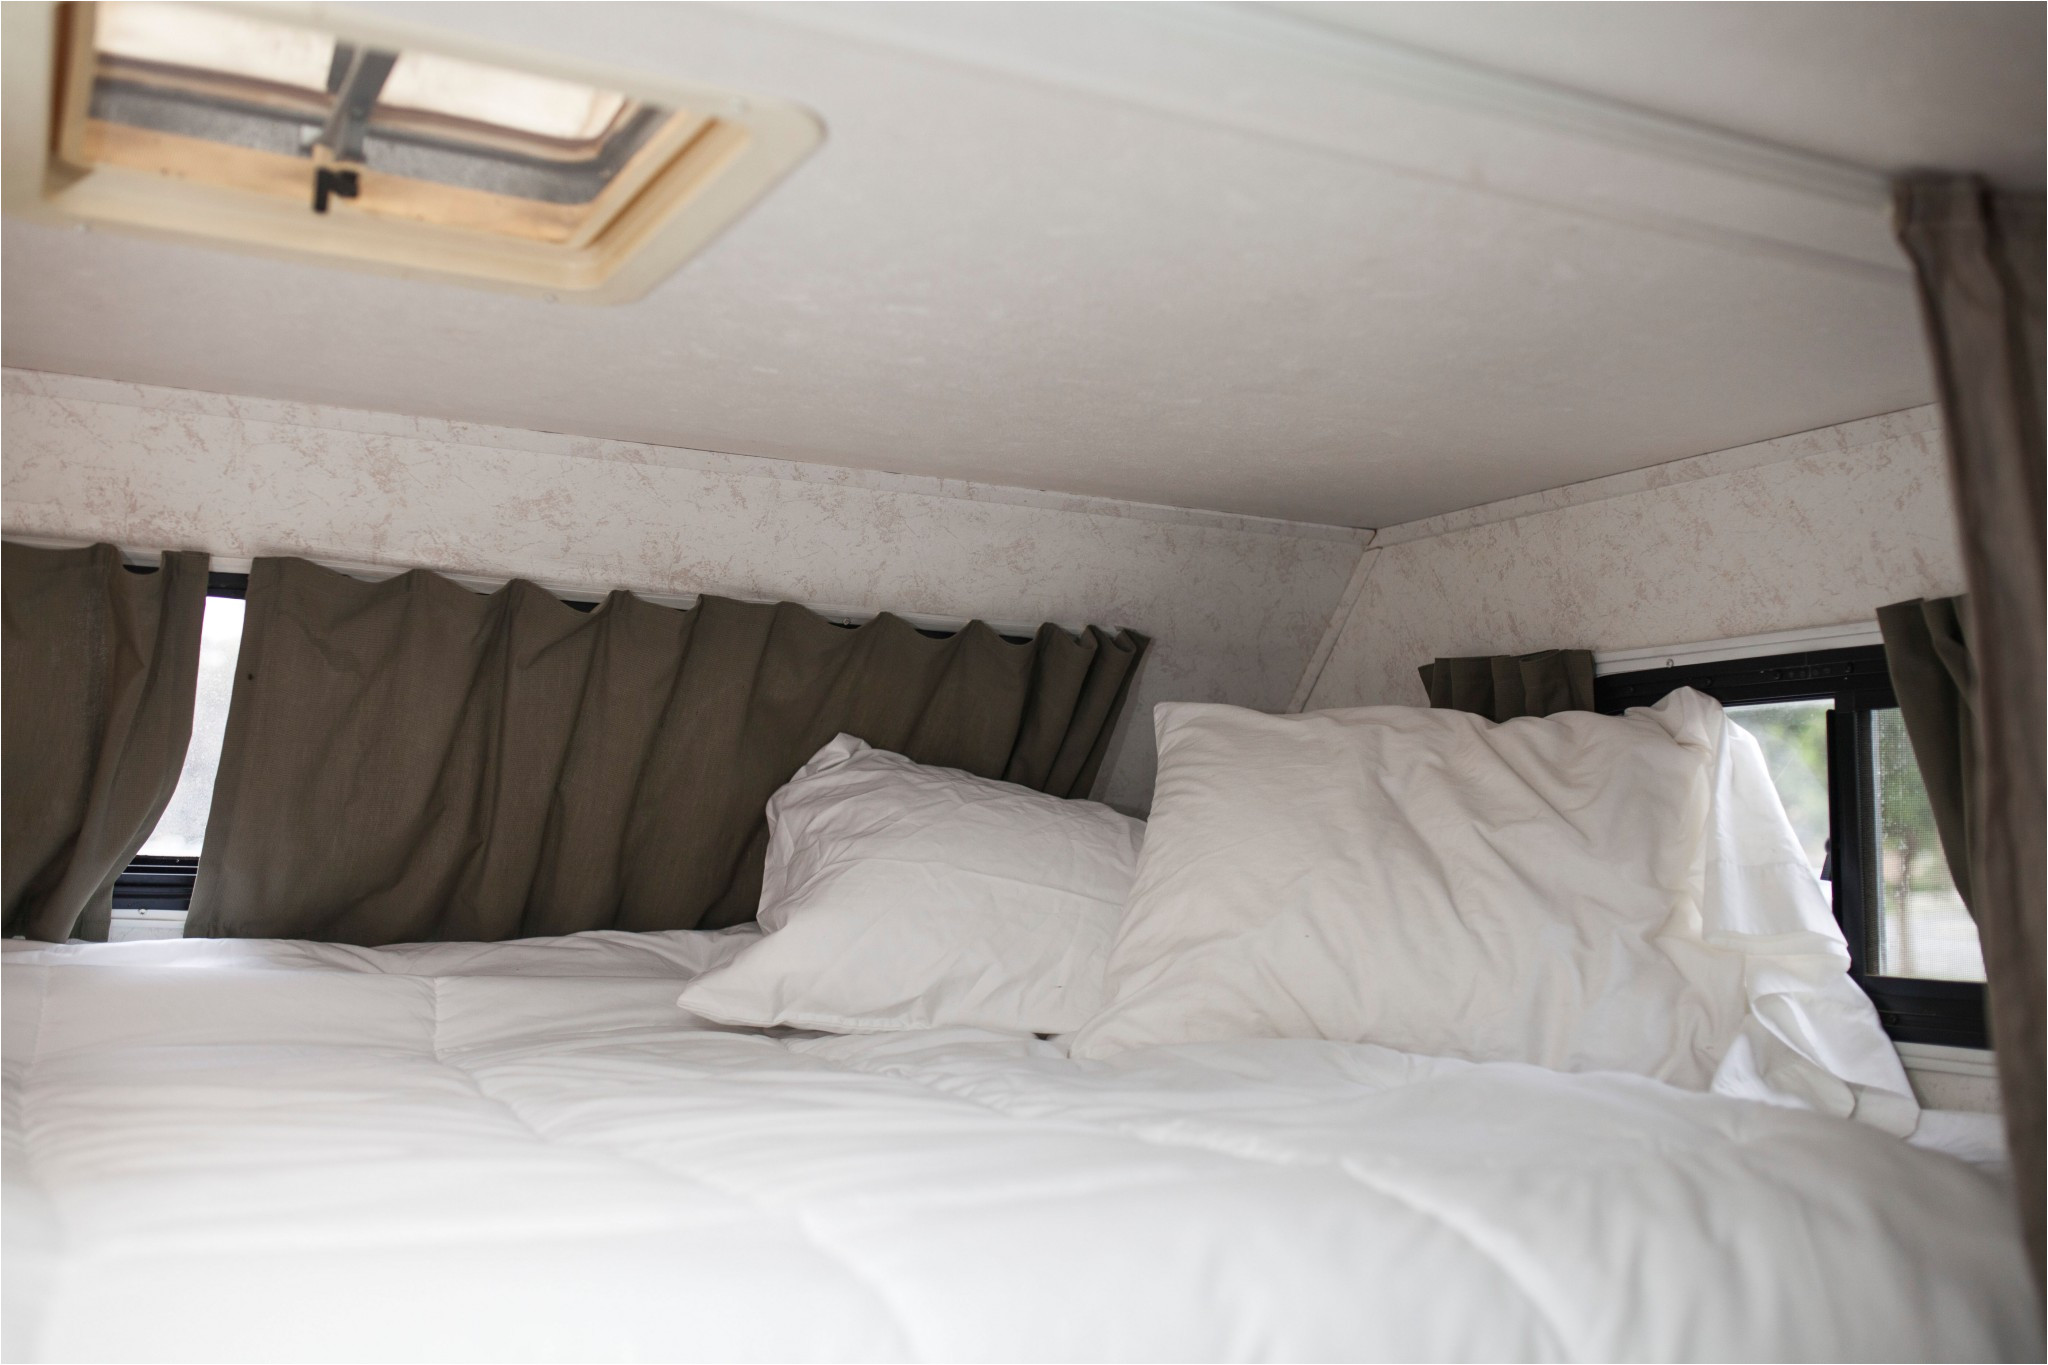 rv bunk bed mattress canada